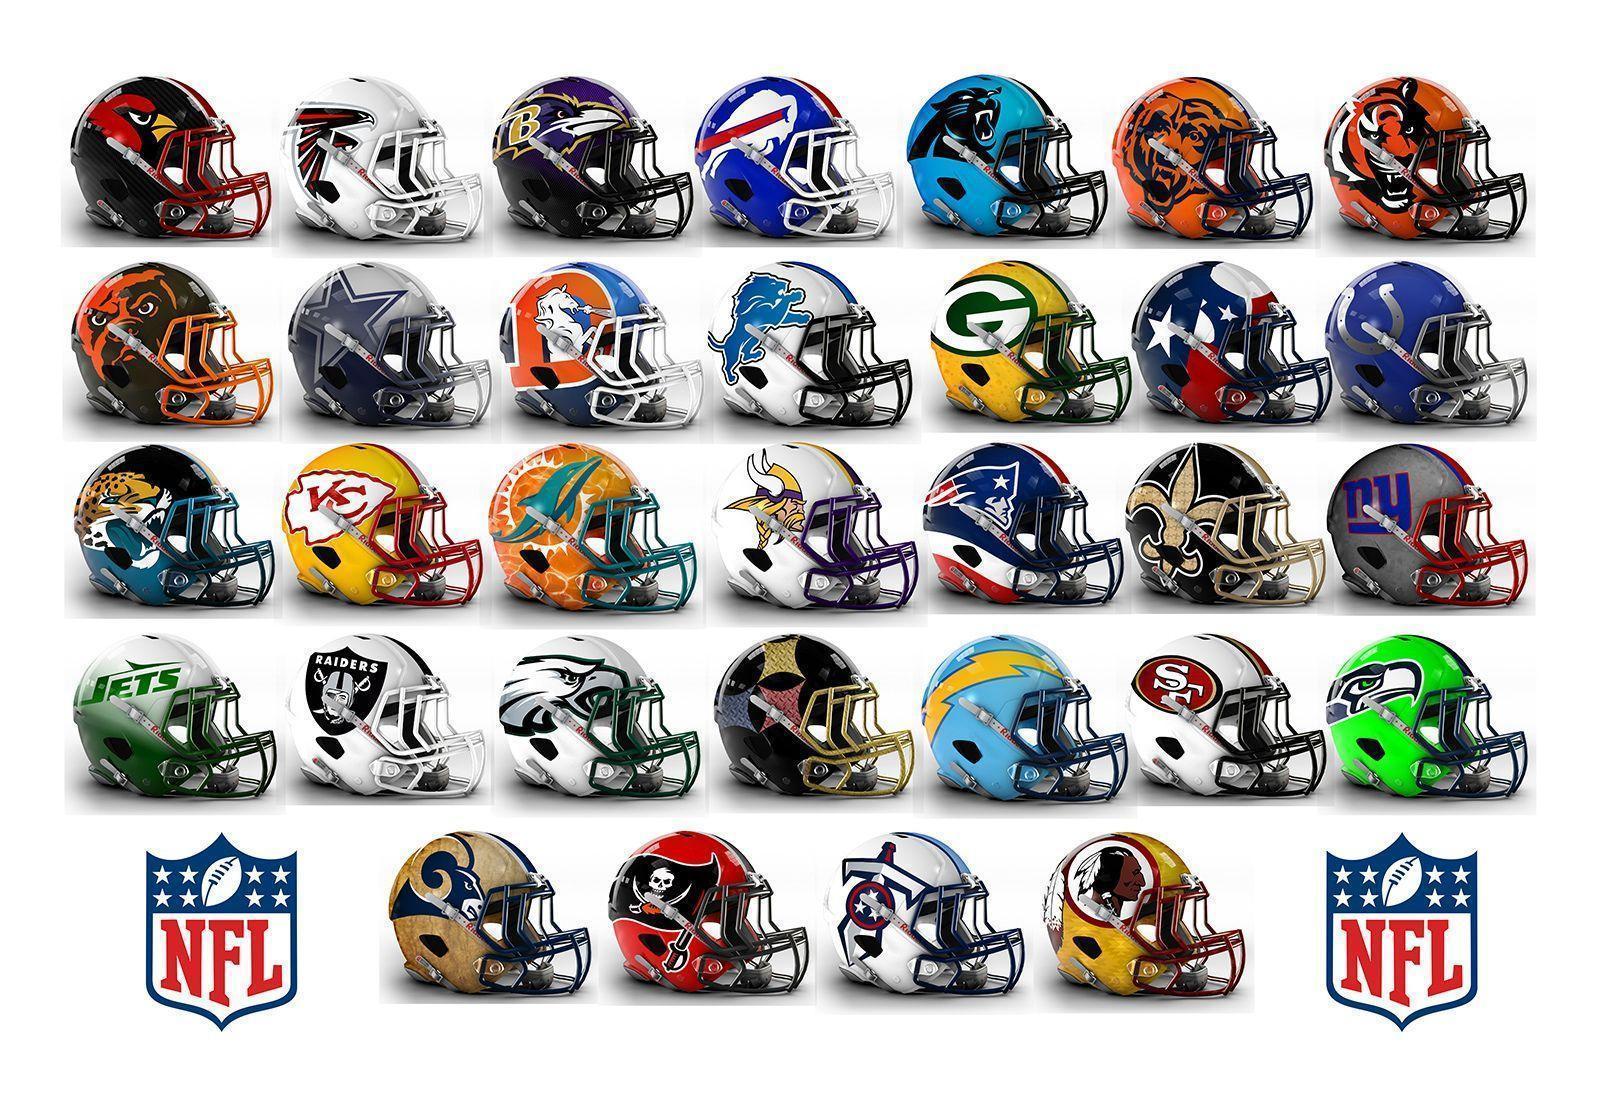 Quality NFL Wallpaper, Sport